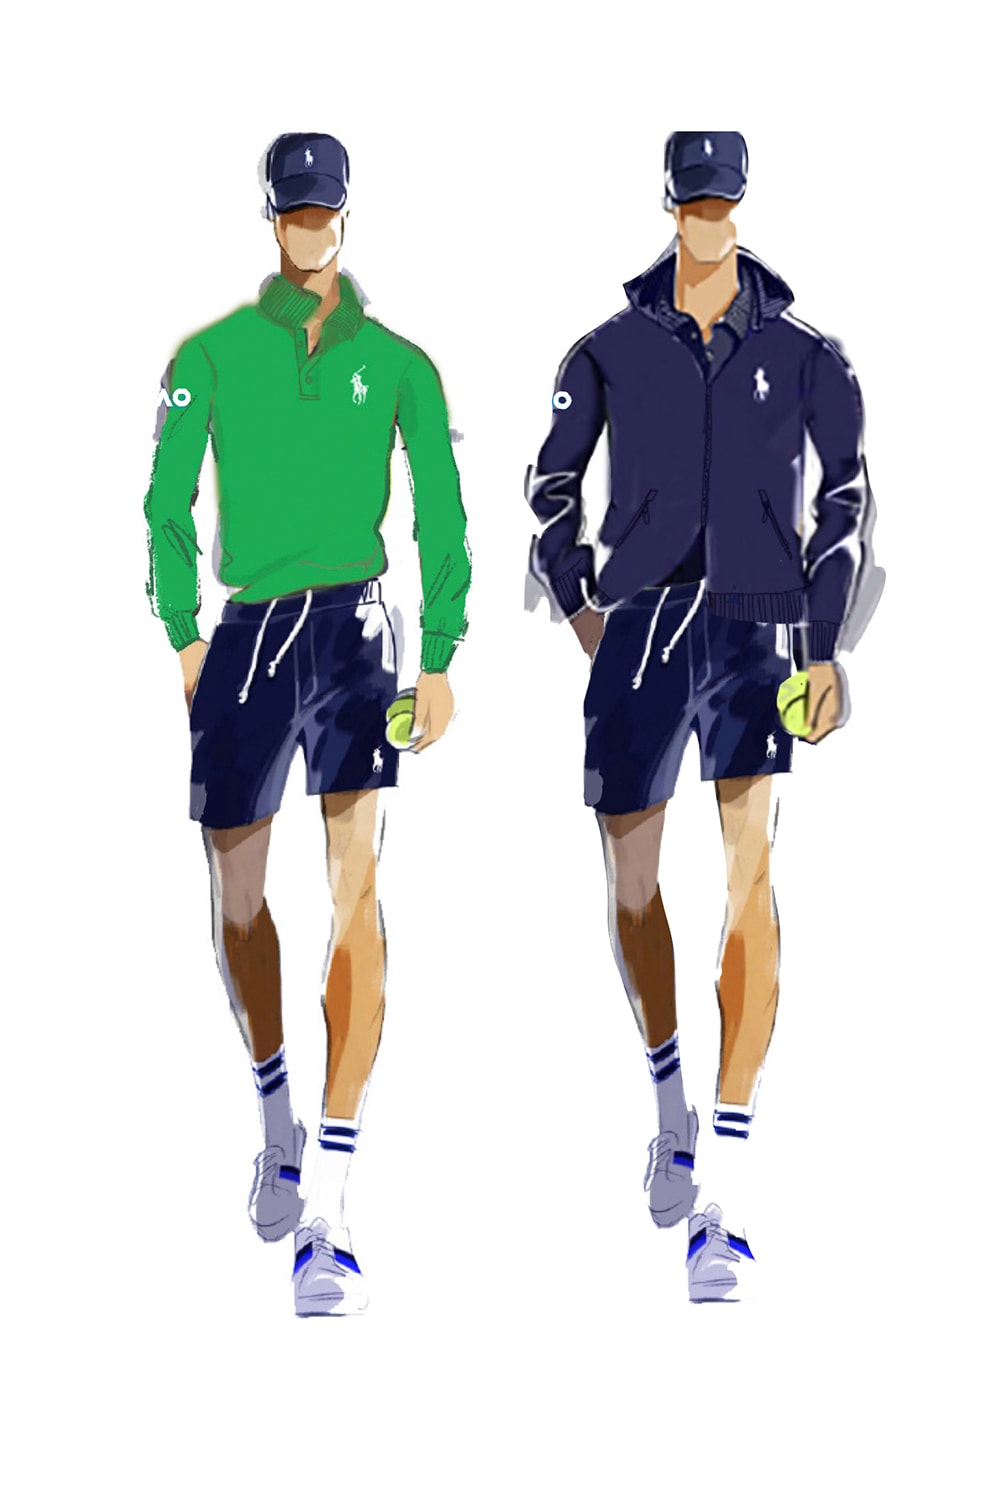 Ralph Lauren 成為澳大利亞網球公開賽官方指定服裝品牌